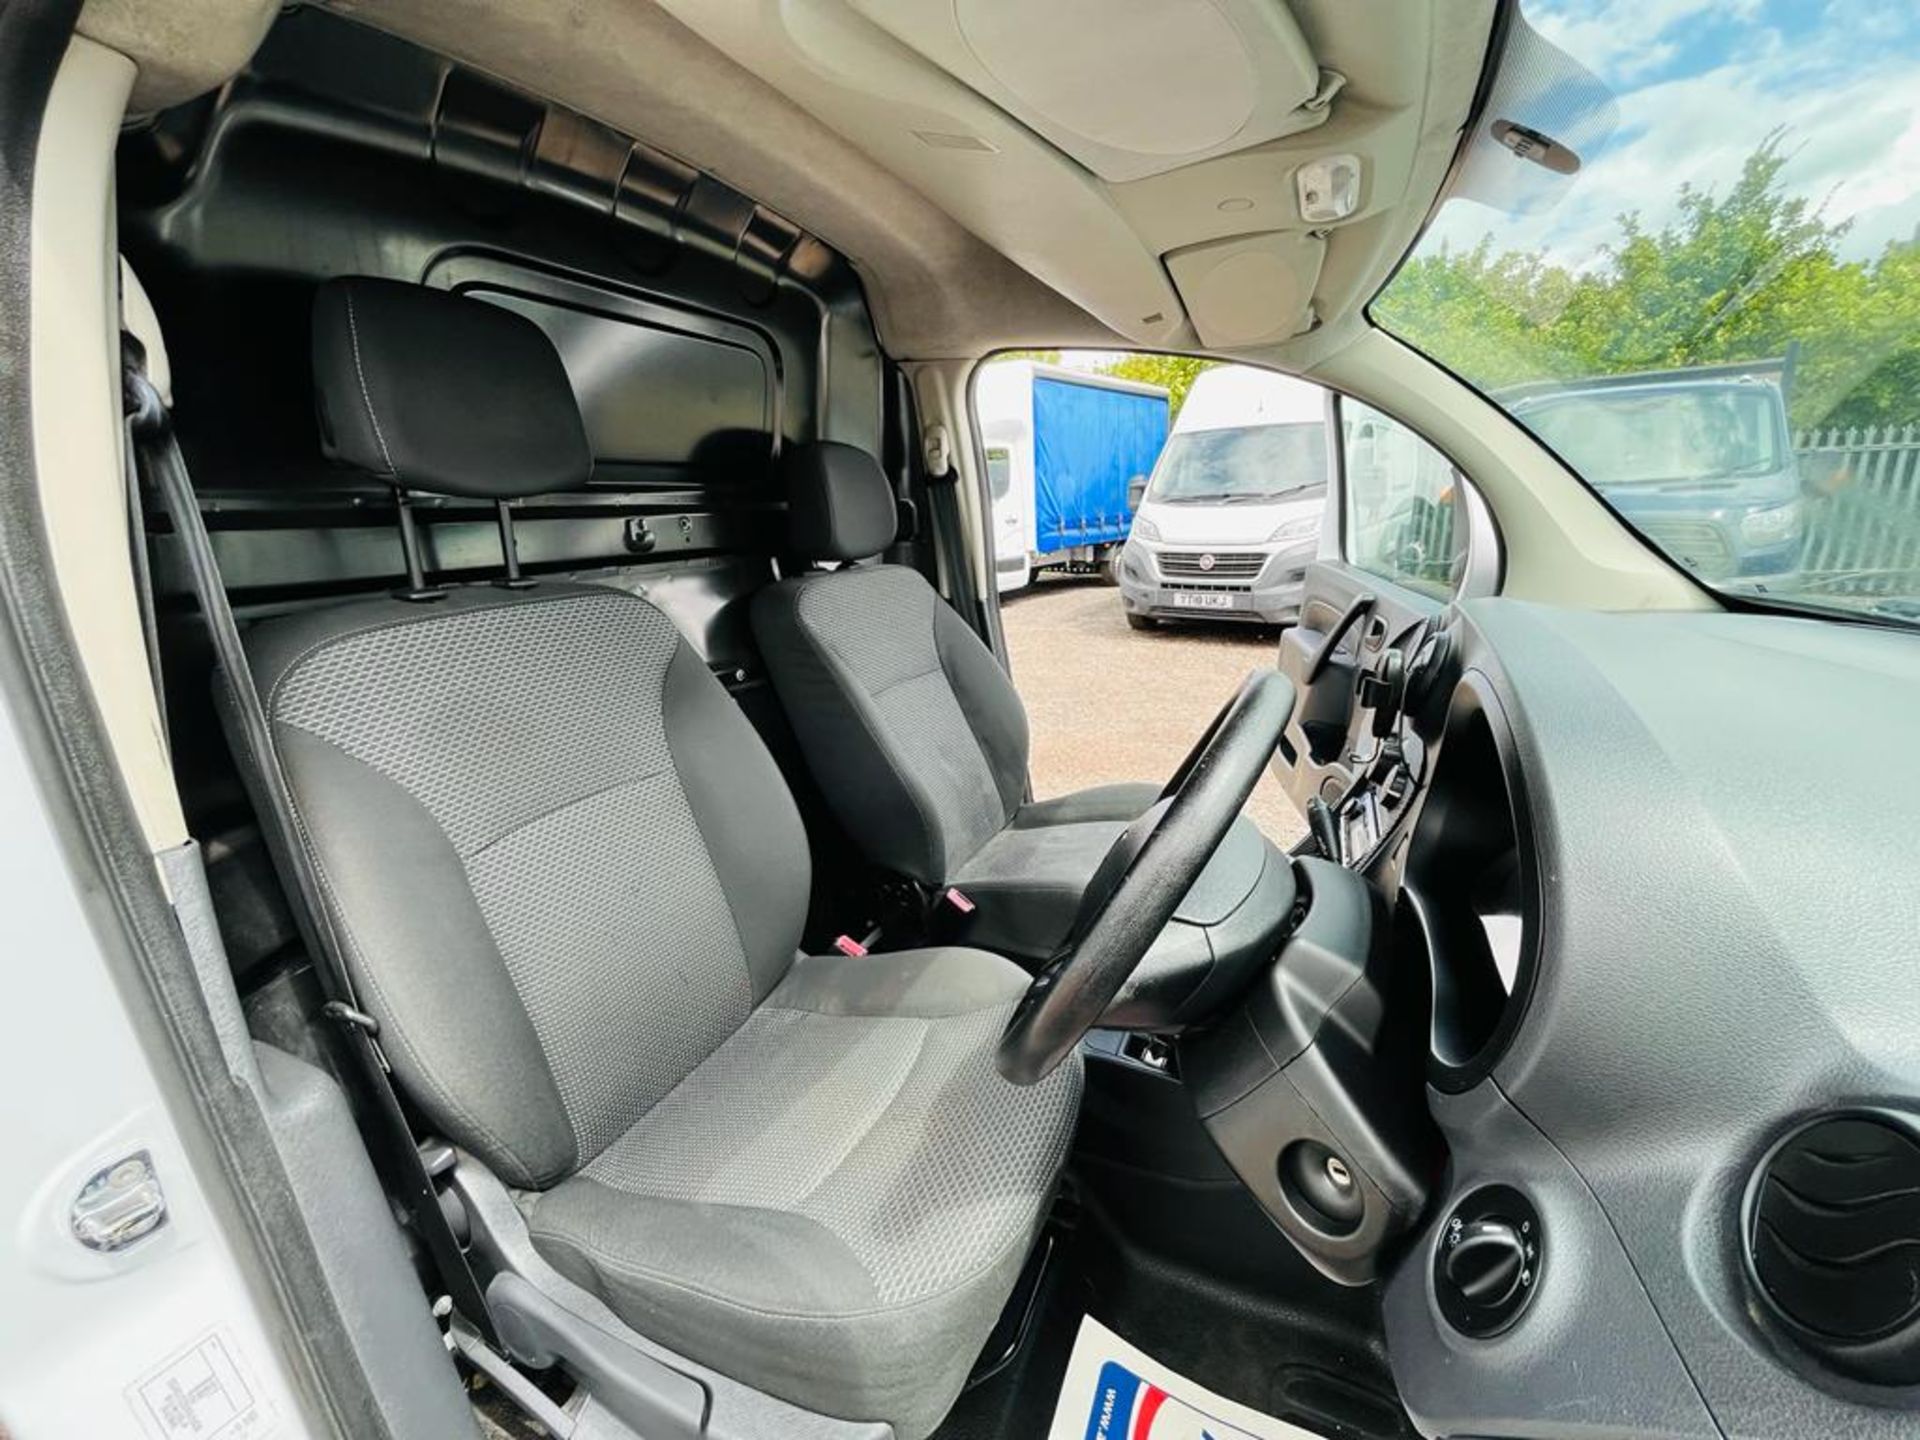 ** ON SALE ** Mercedes Benz Citan 1.5 CDI 109 LWB 2014 '14 Reg' - Panel Van - NO VAT - Image 16 of 26